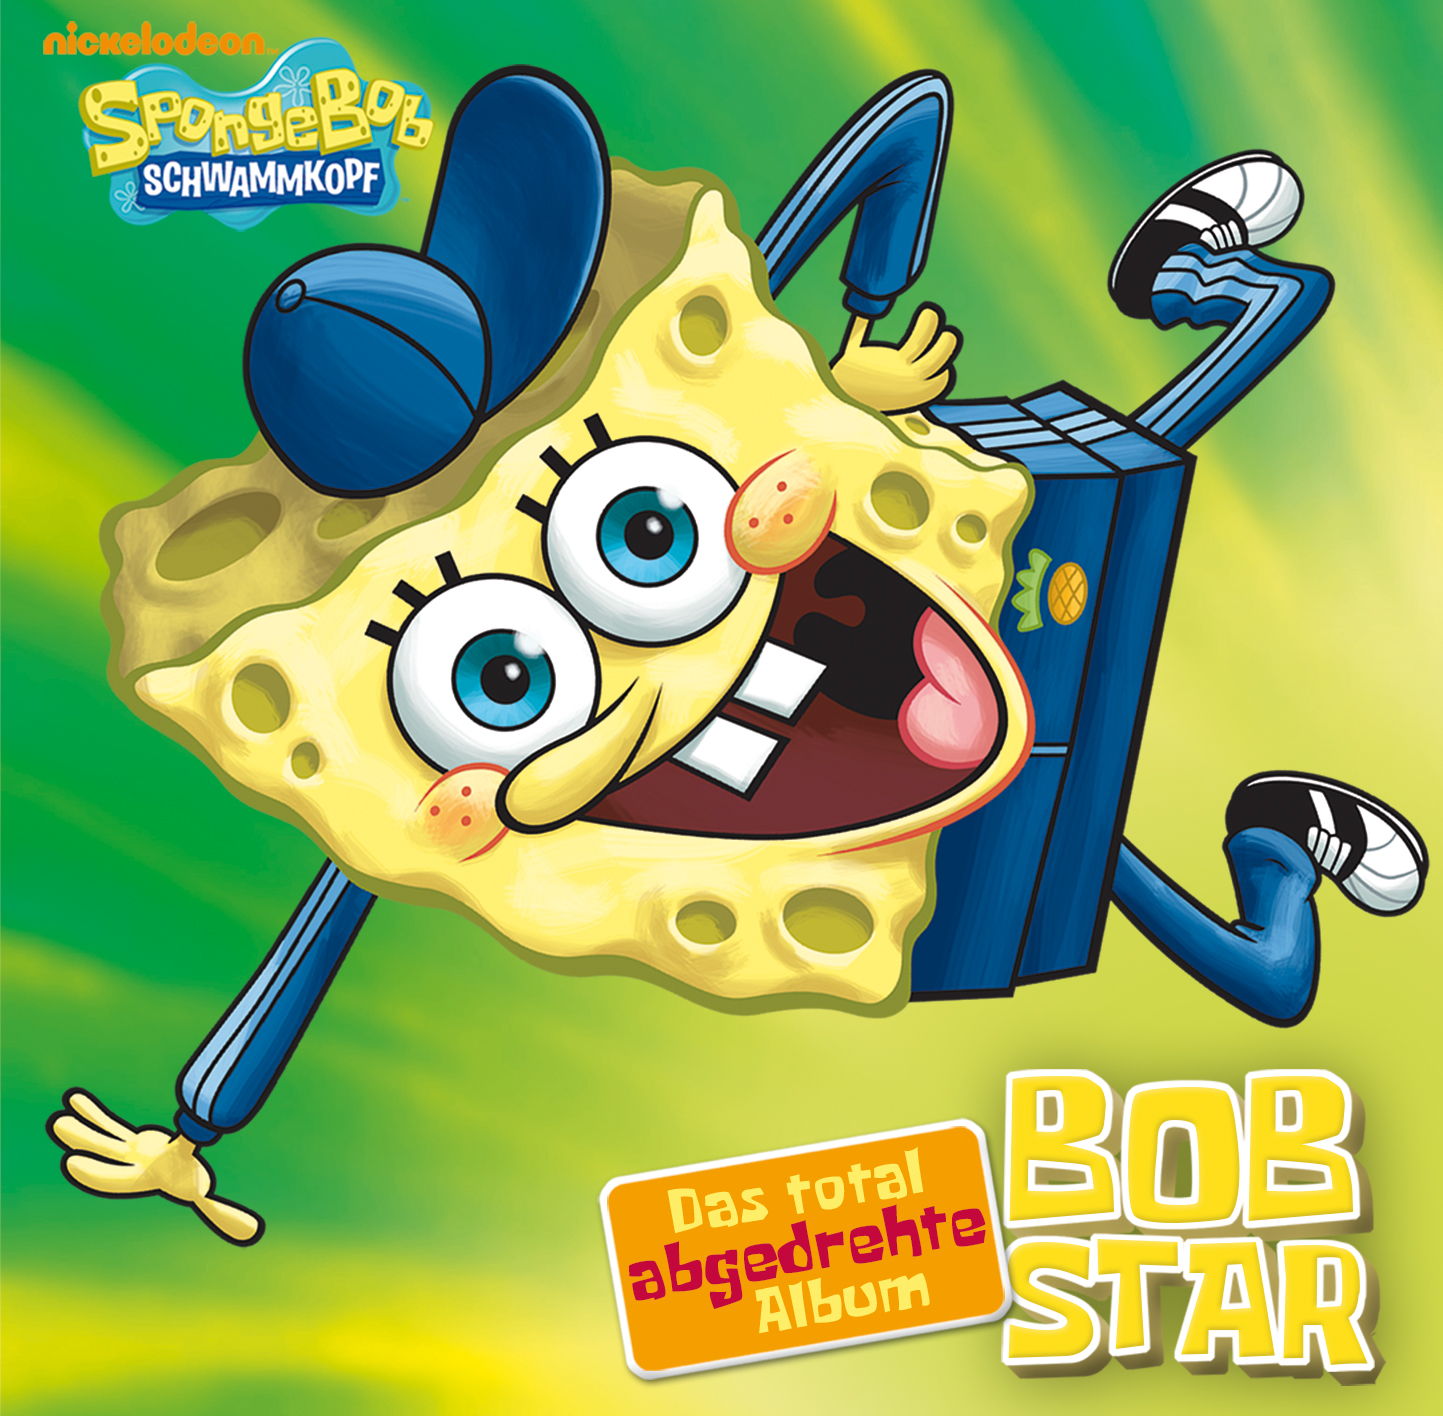 SpongeBob - "Bobstar - Das Total Abgedrehte Album"